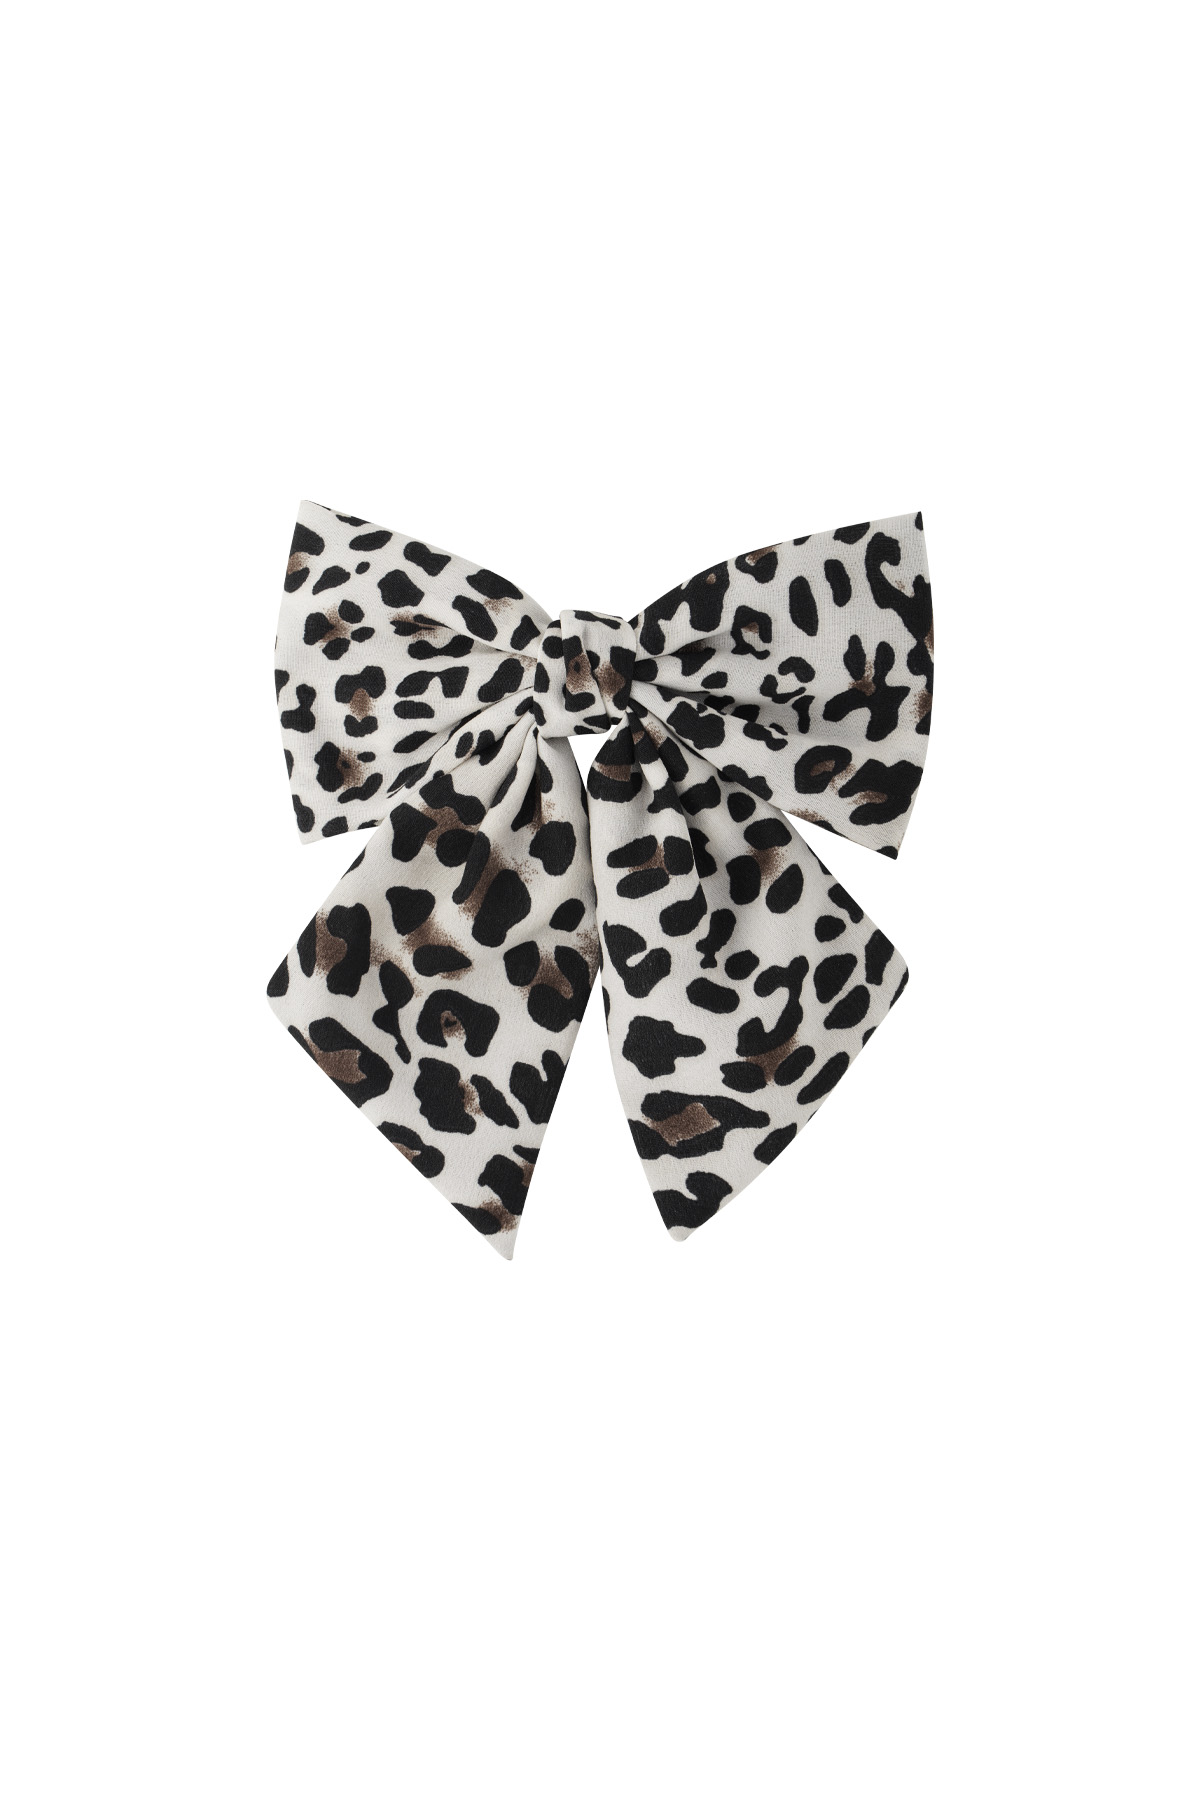 Panther print bow - black/white  h5 